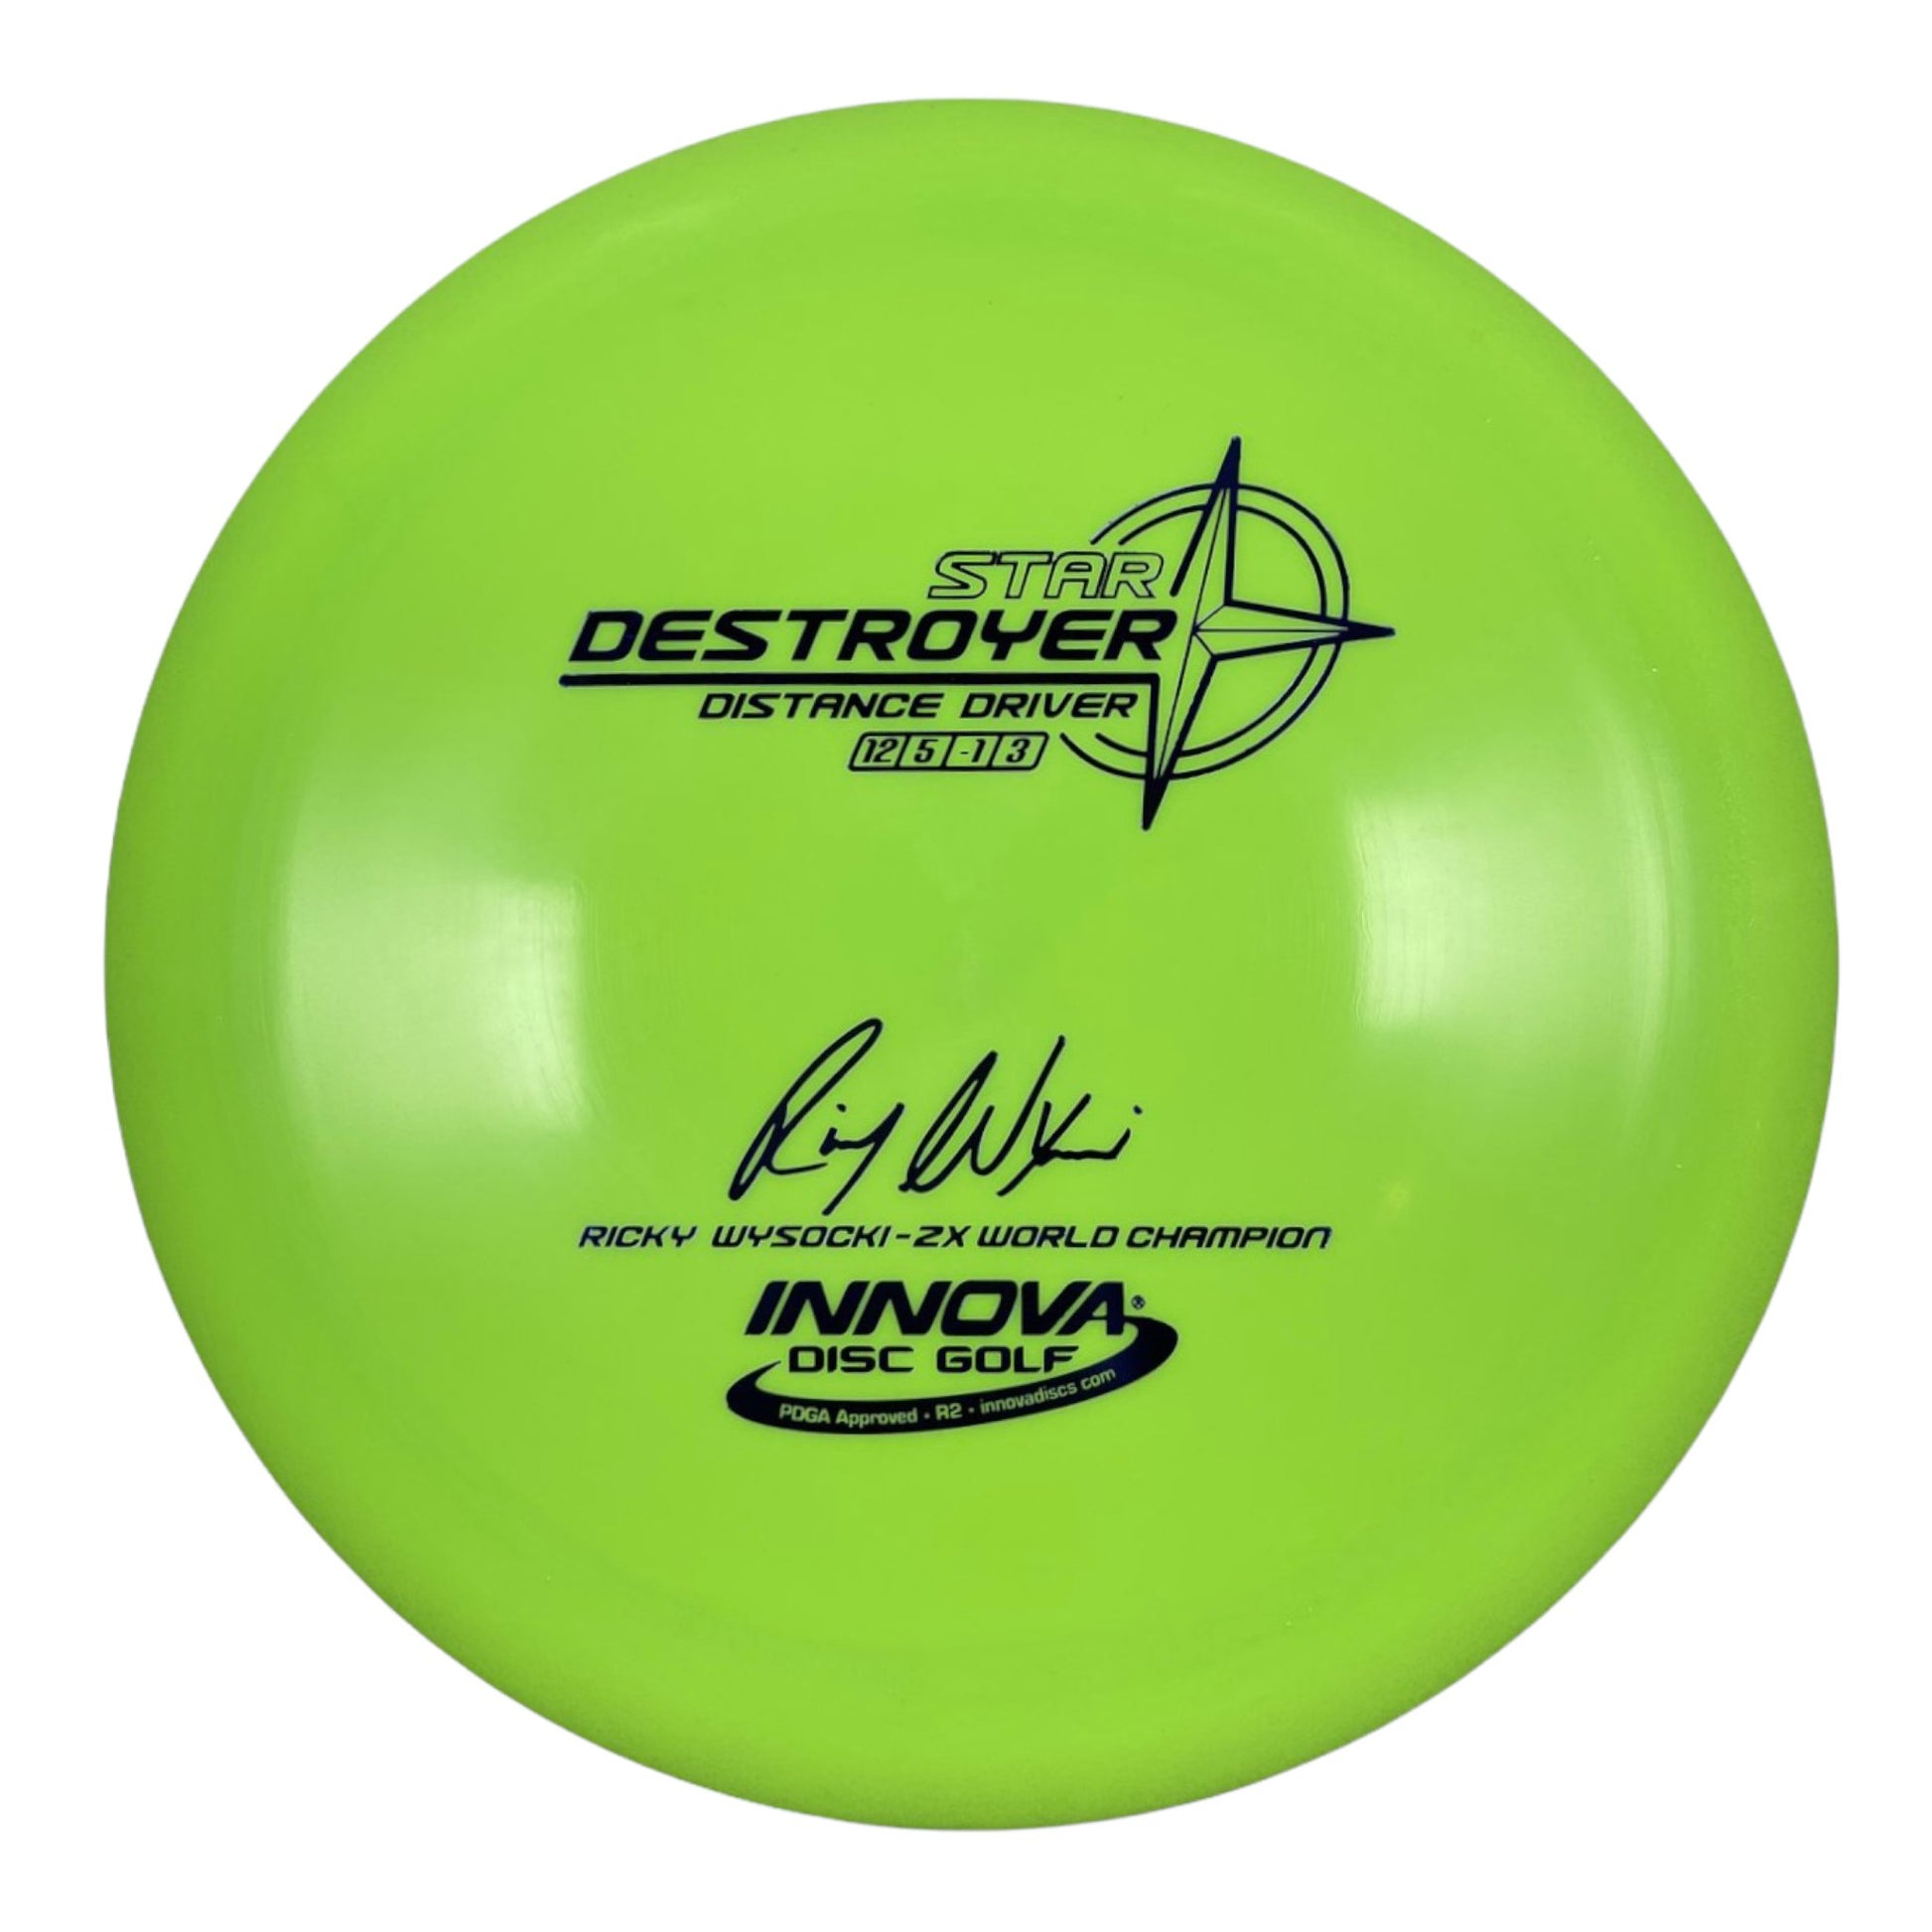 Innova Champion Discs Destroyer | Star | Green/Blue 170g (Ricky Wysocki) Disc Golf